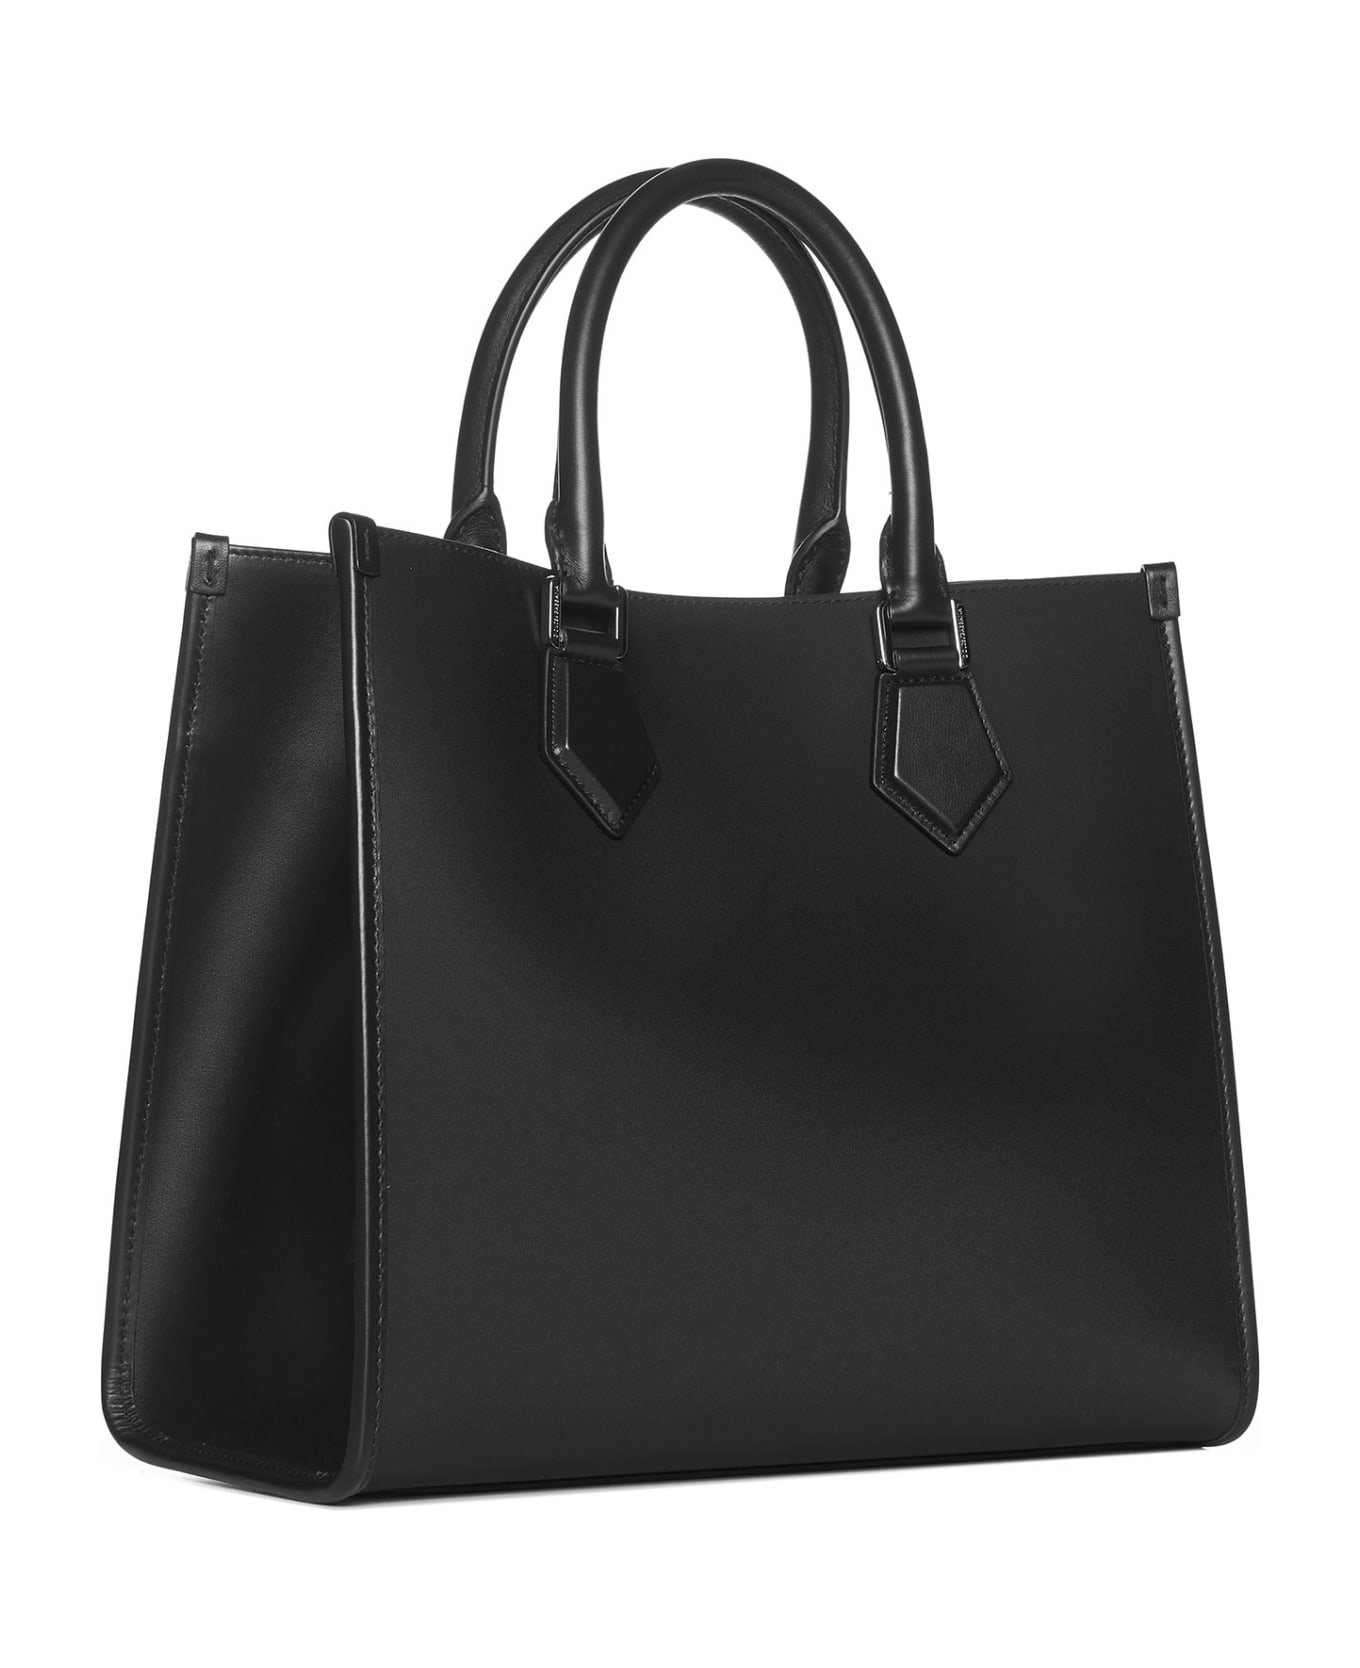 Dolce & Gabbana Logo Shopping Bag - Nero/nero